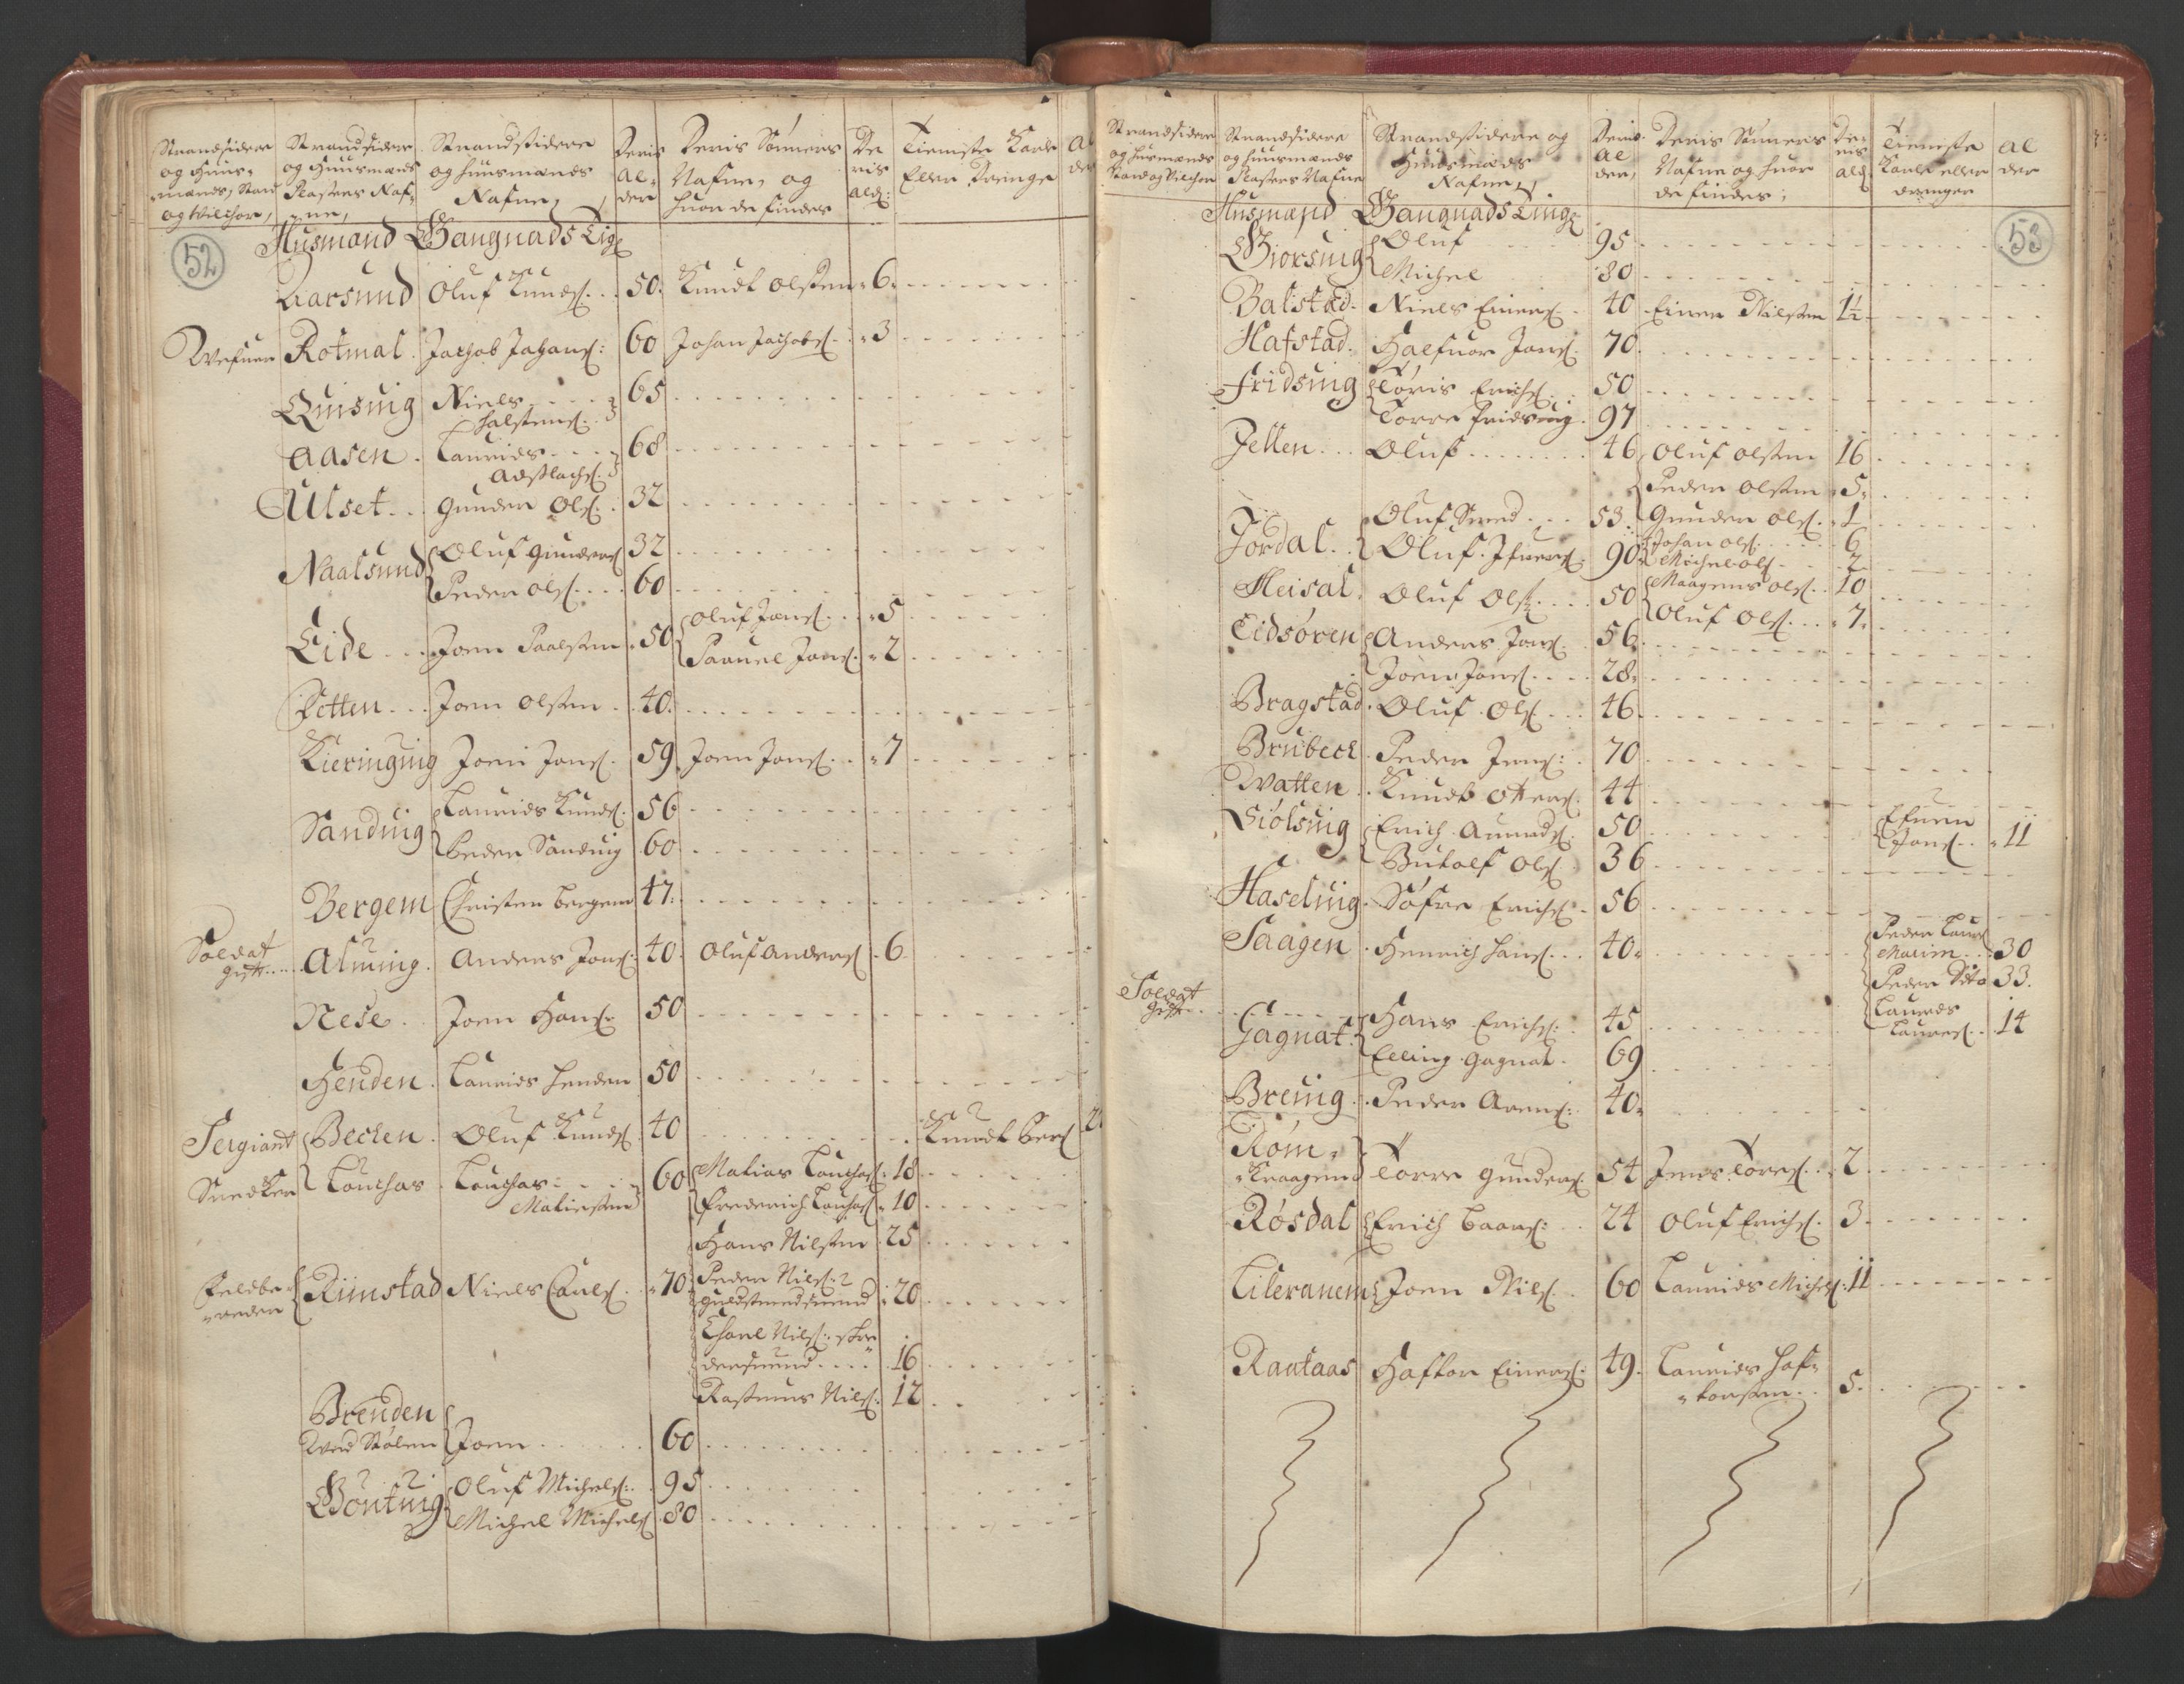 RA, Manntallet 1701, nr. 11: Nordmøre fogderi og Romsdal fogderi, 1701, s. 52-53